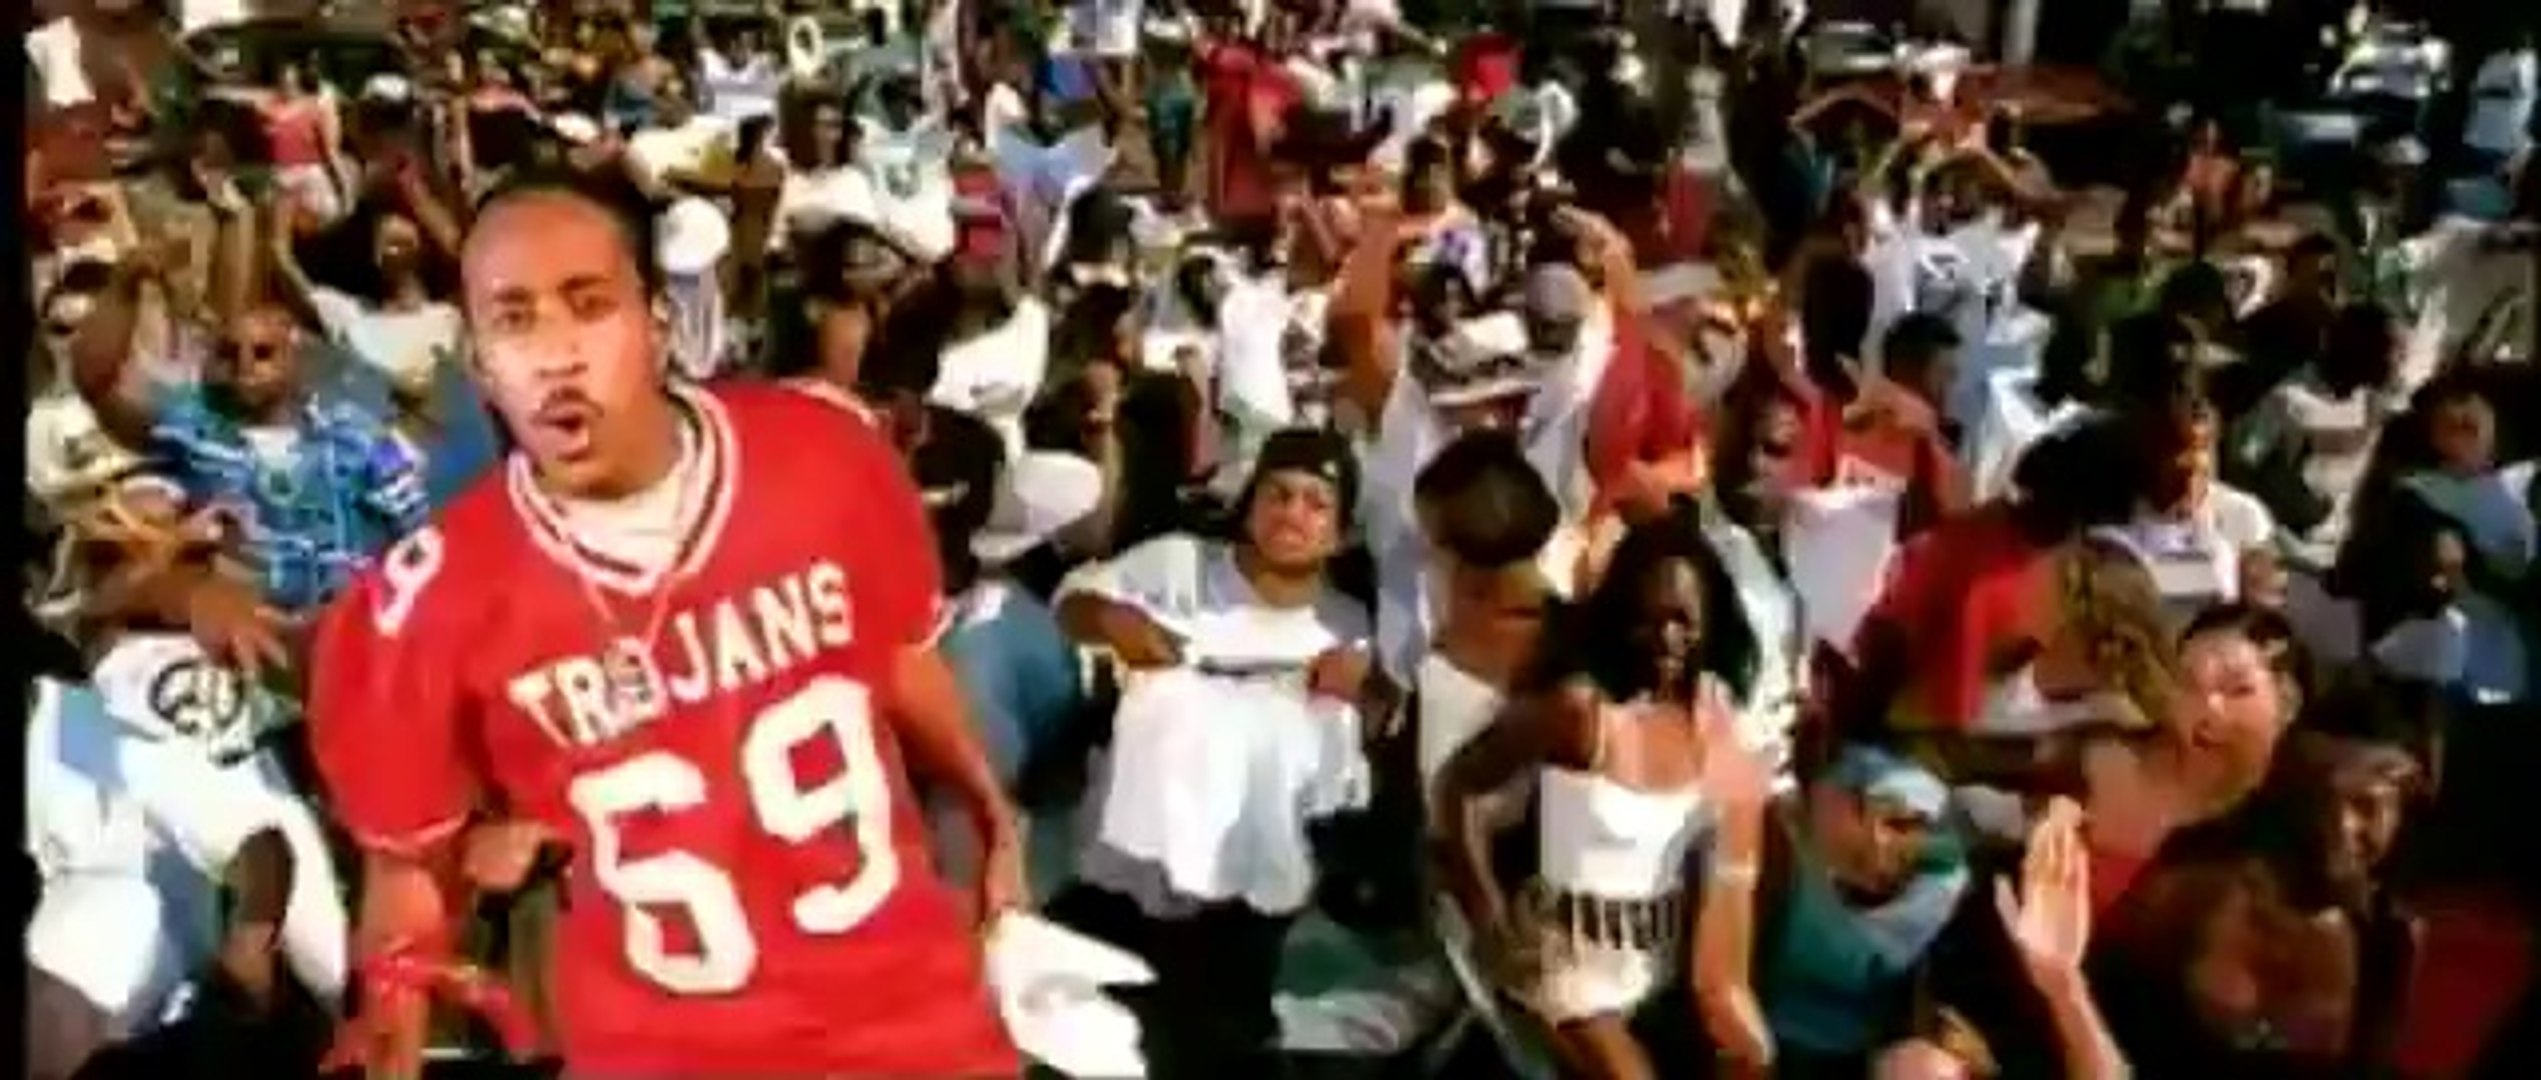 Music Videos by Ludacris - Bing Videos-2